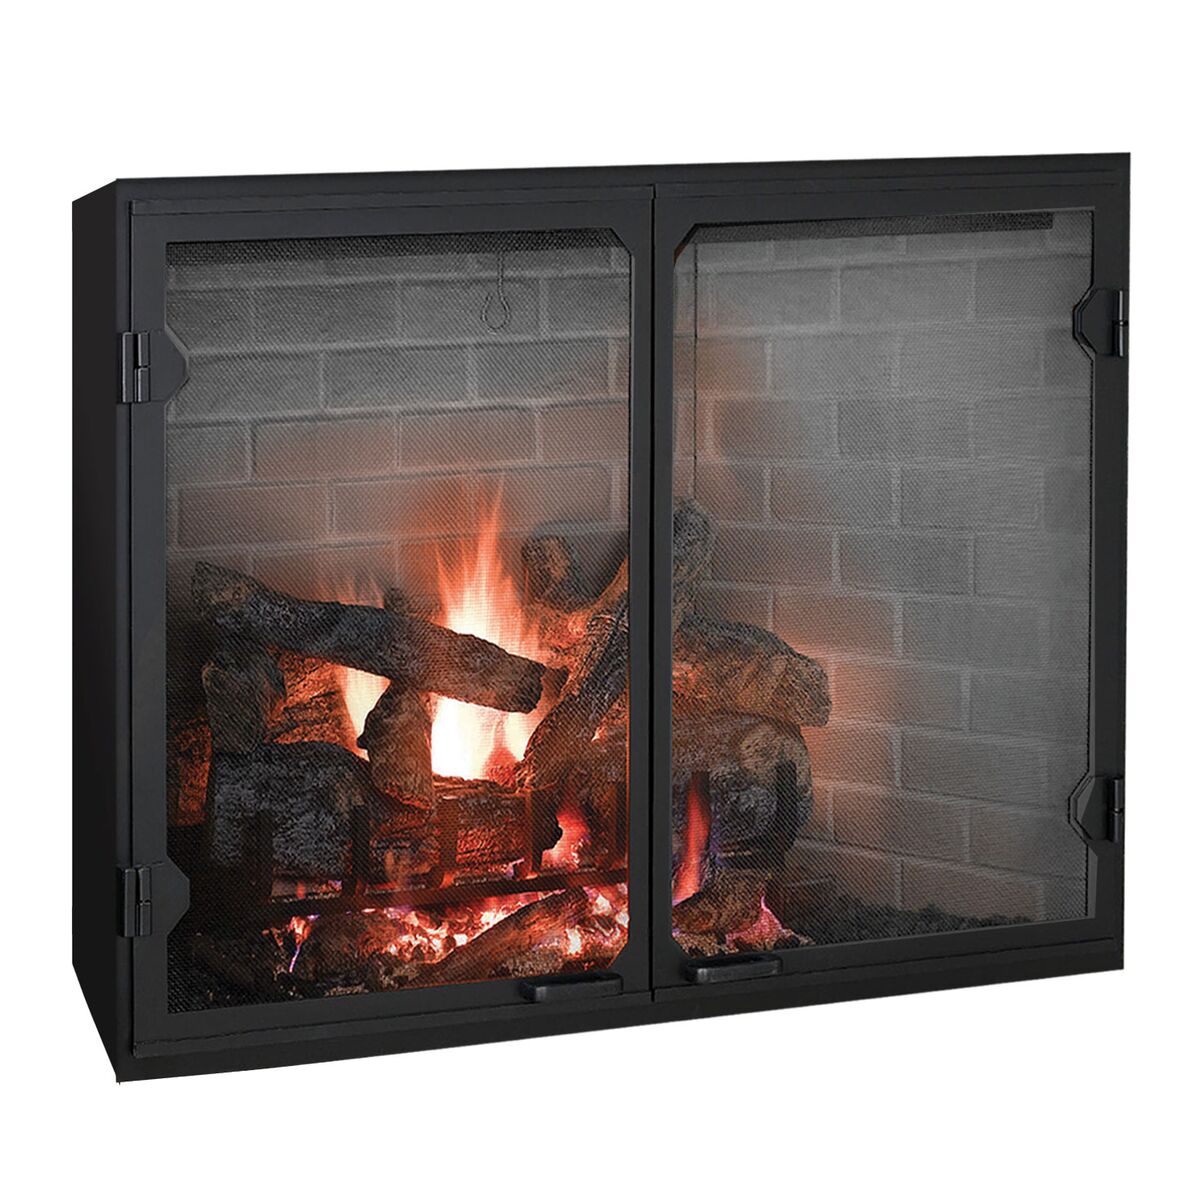 Majestic Biltmore 36 Radiant Wood Burning Fireplace | FireplaceTrends.com